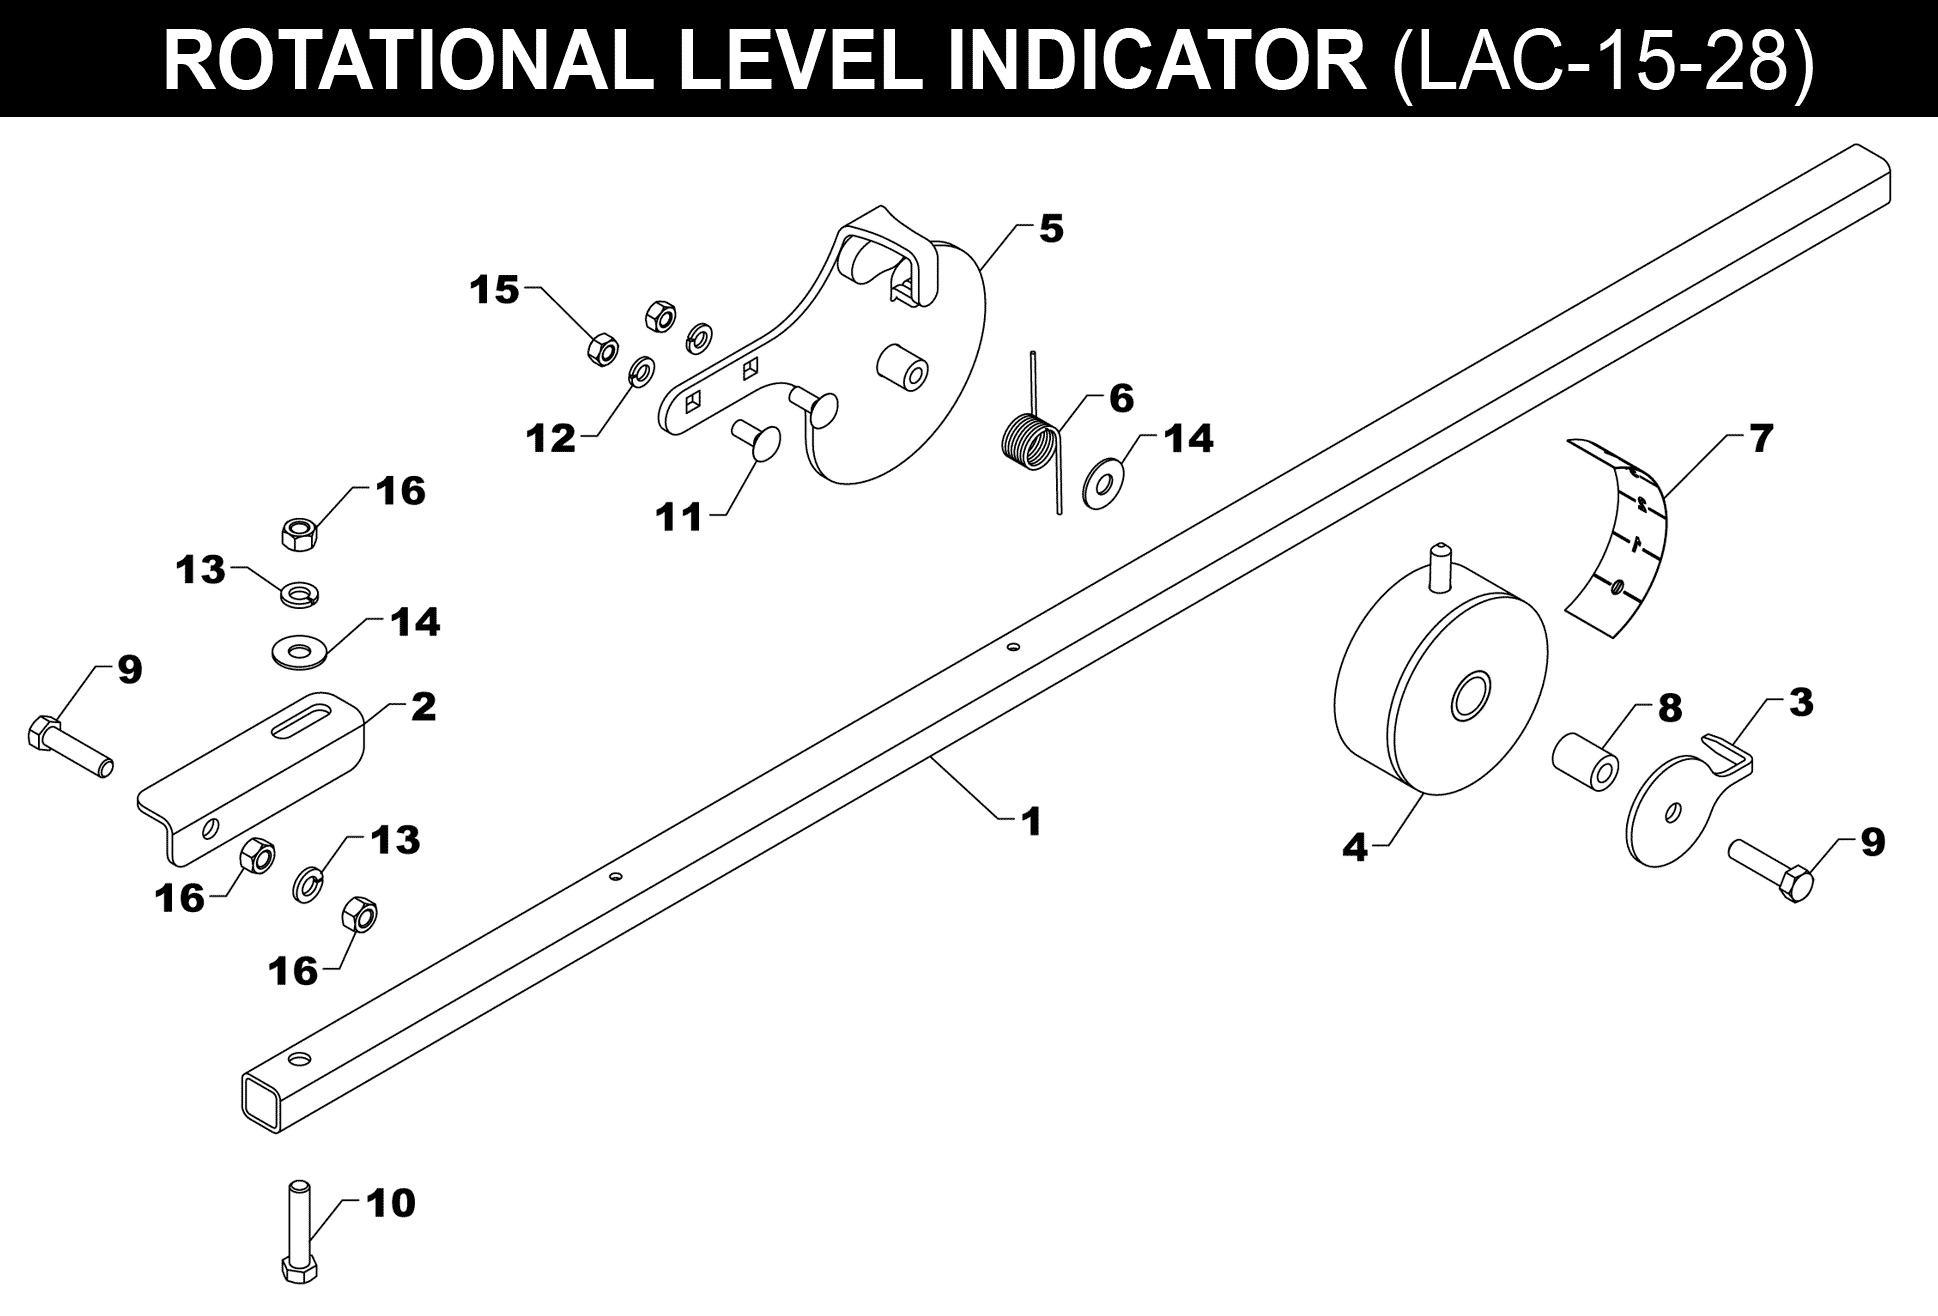 Bucket Indicator - LAC-15-28